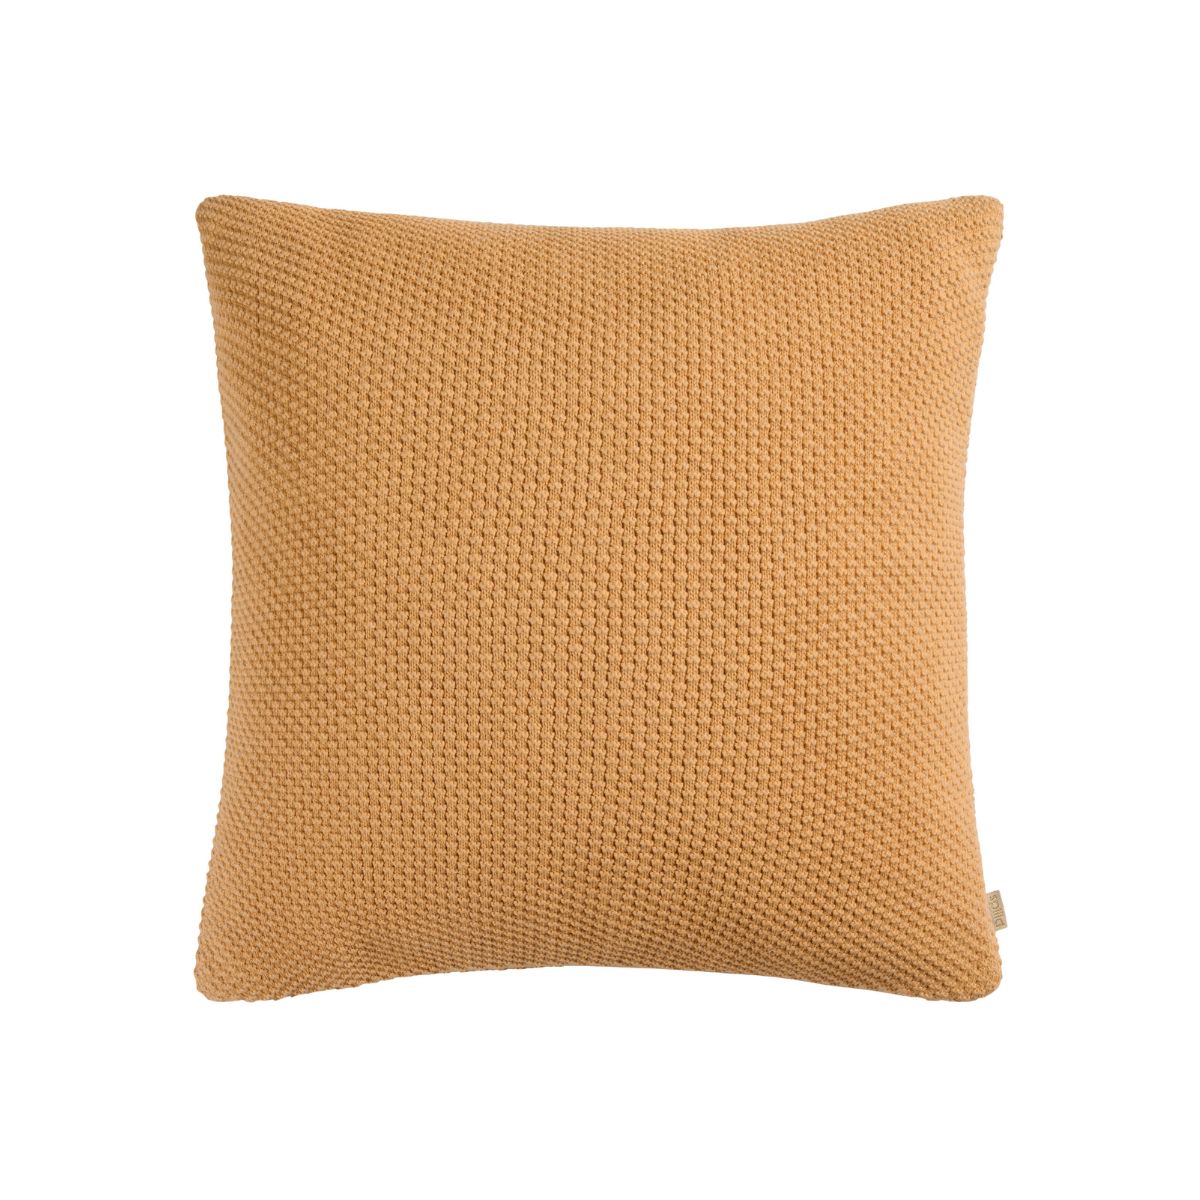 Nora - Mustard color cushion 